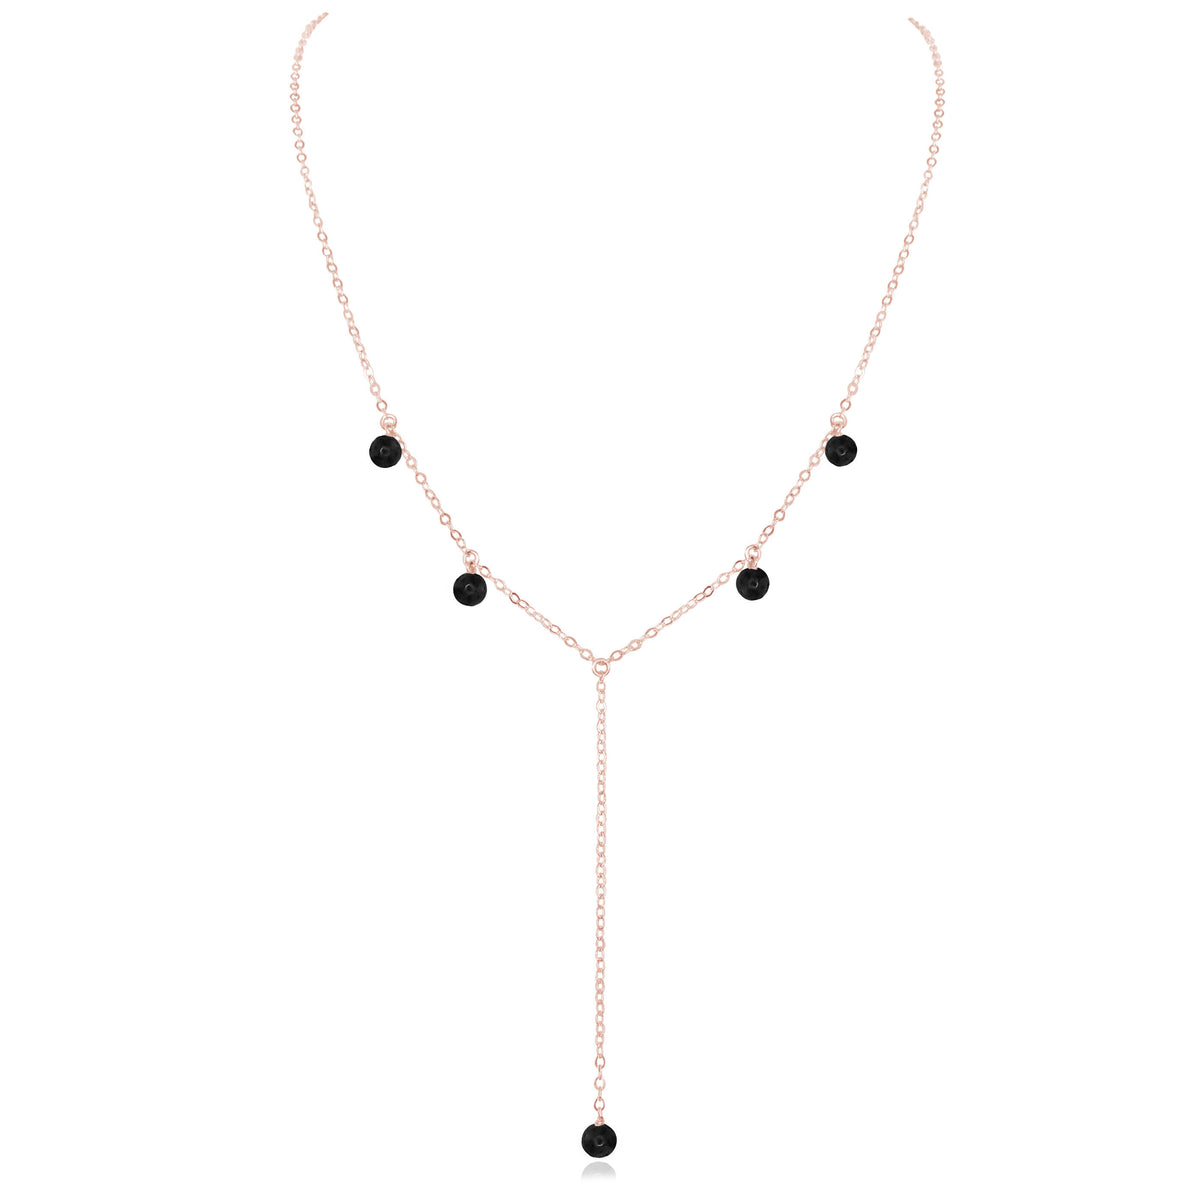 Boho Y Necklace - Black Onyx - 14K Rose Gold Fill - Luna Tide Handmade Jewellery